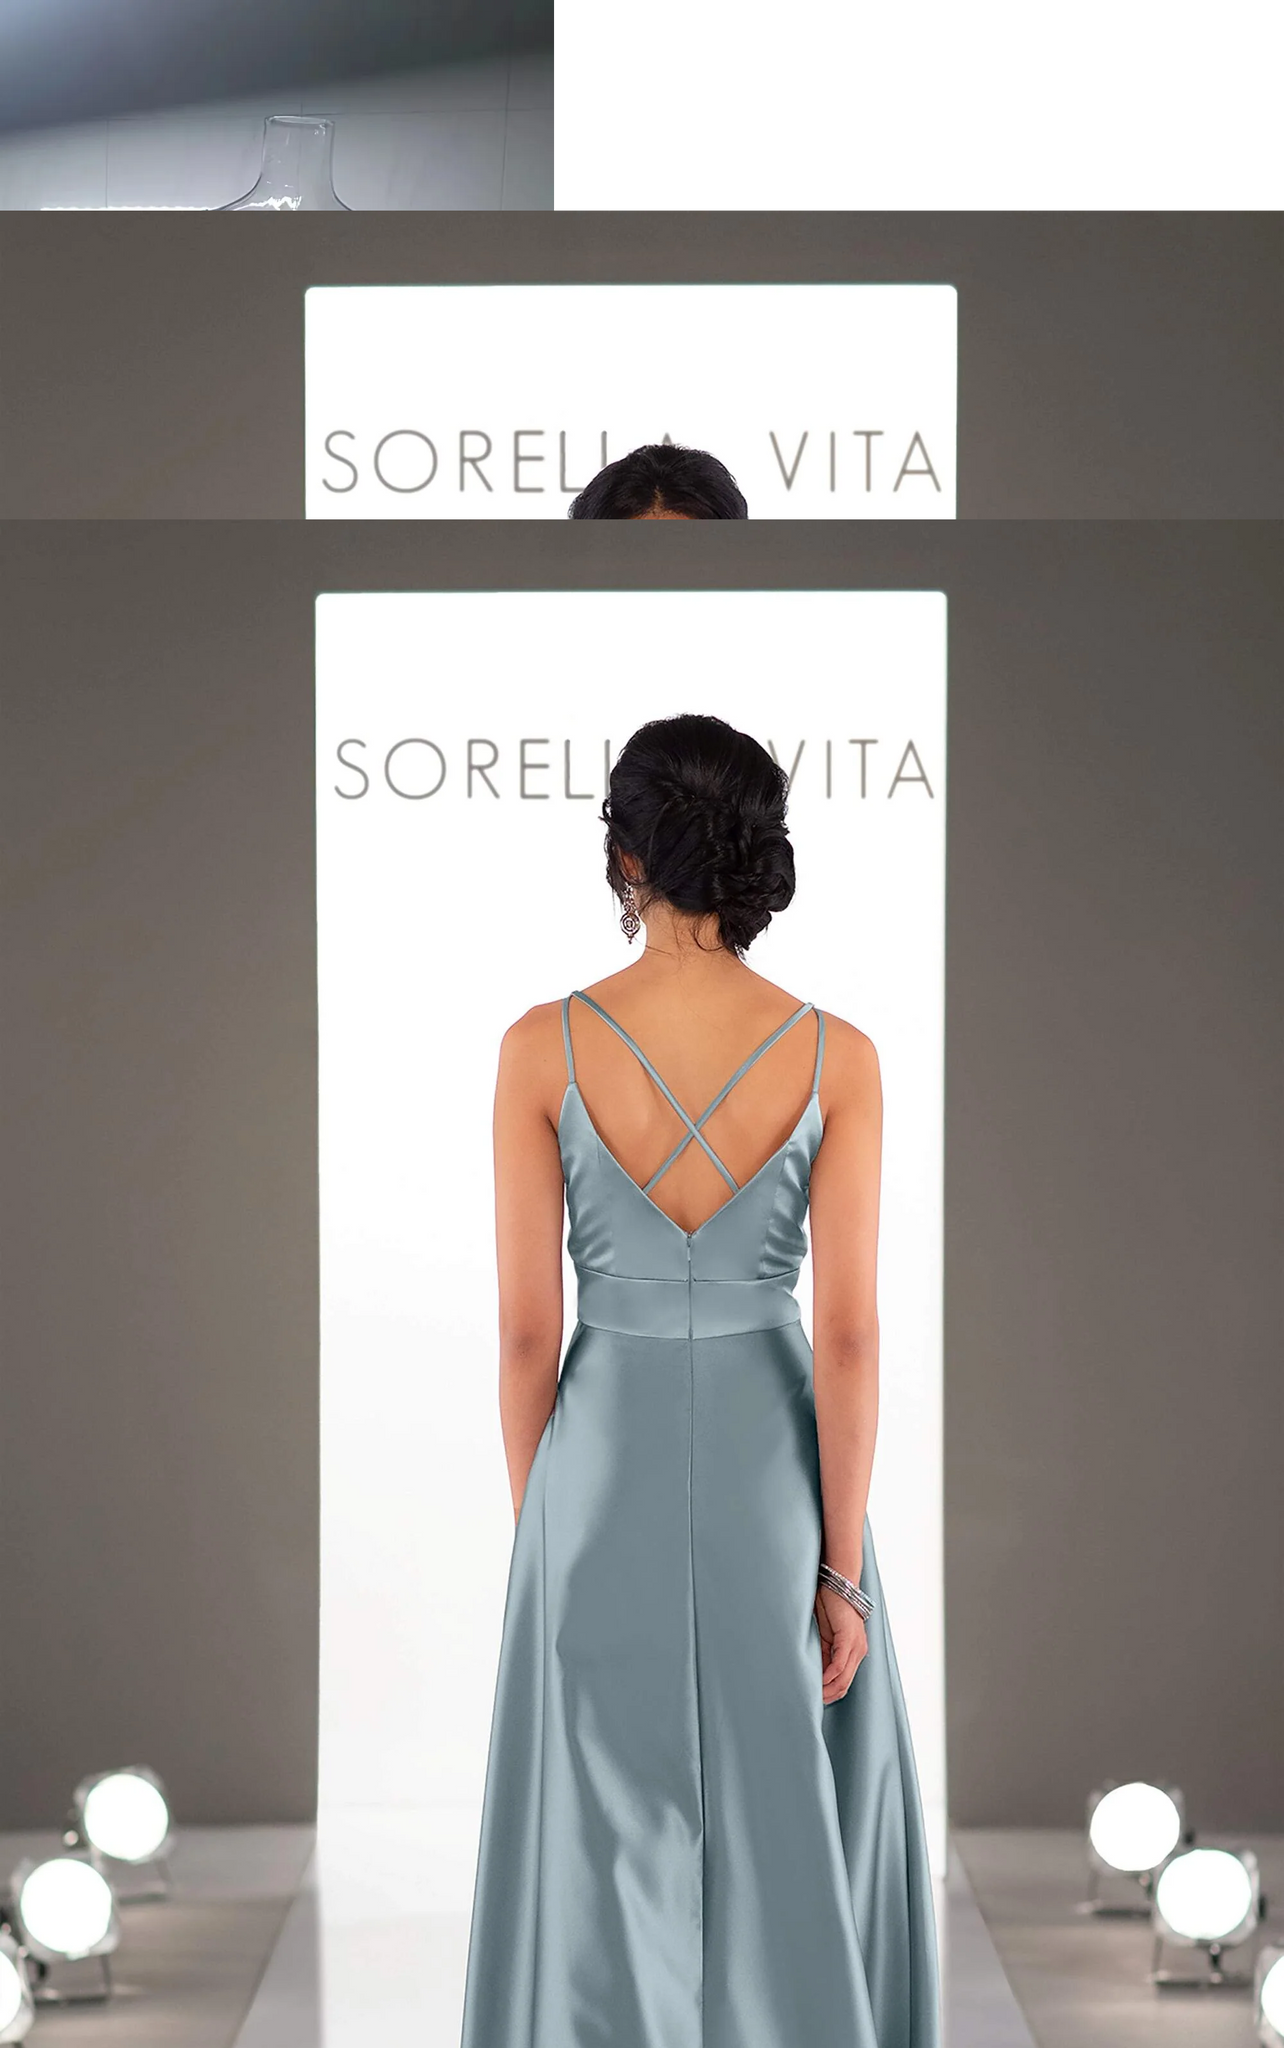 Sorella Vita Dress Style 9168 (Steel-Size 12) Prom, Ball., Black-tie, Bridesmaid, Pageant